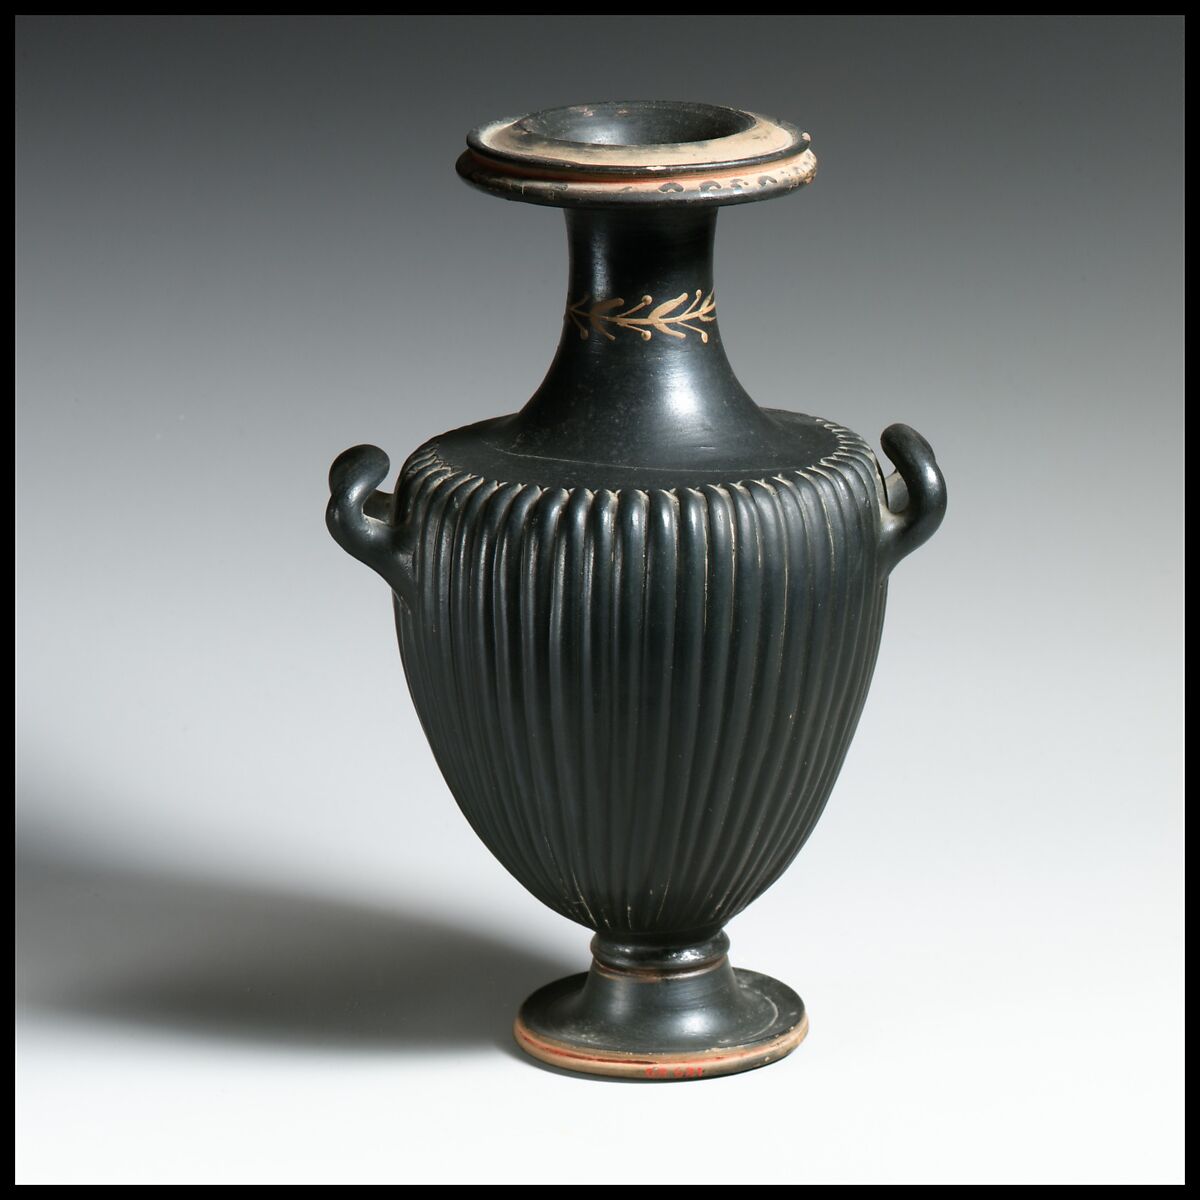 Terracotta hydria (water jar), Terracotta, Greek, South Italian, Apulian 